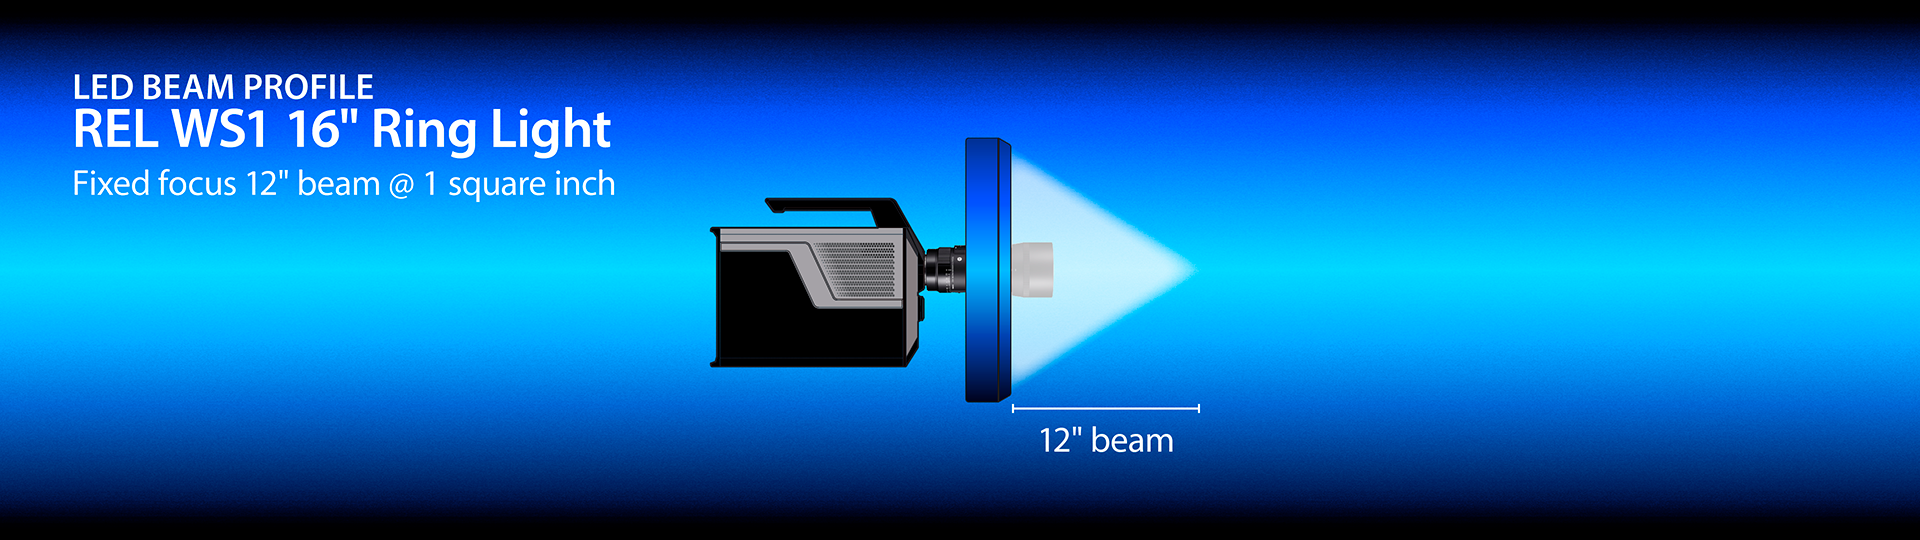 REL WS1 LED beam profile illustration